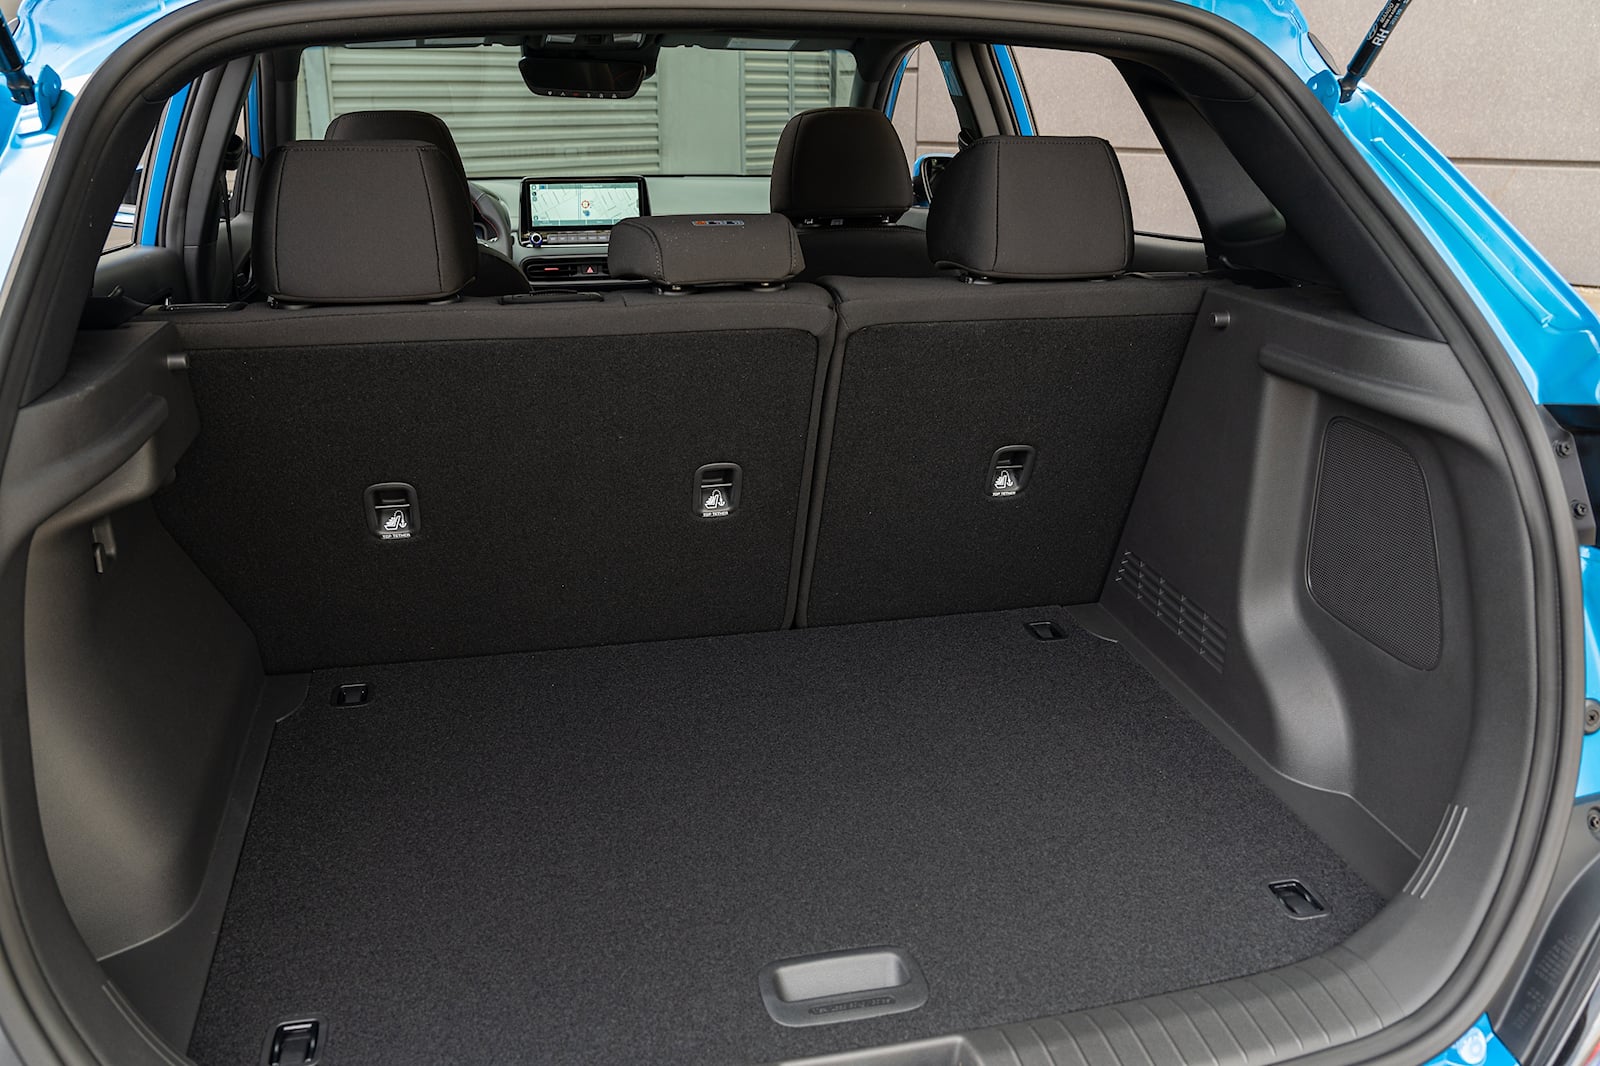 2023 Hyundai Kona Electric Interior Dimensions: Seating, Cargo